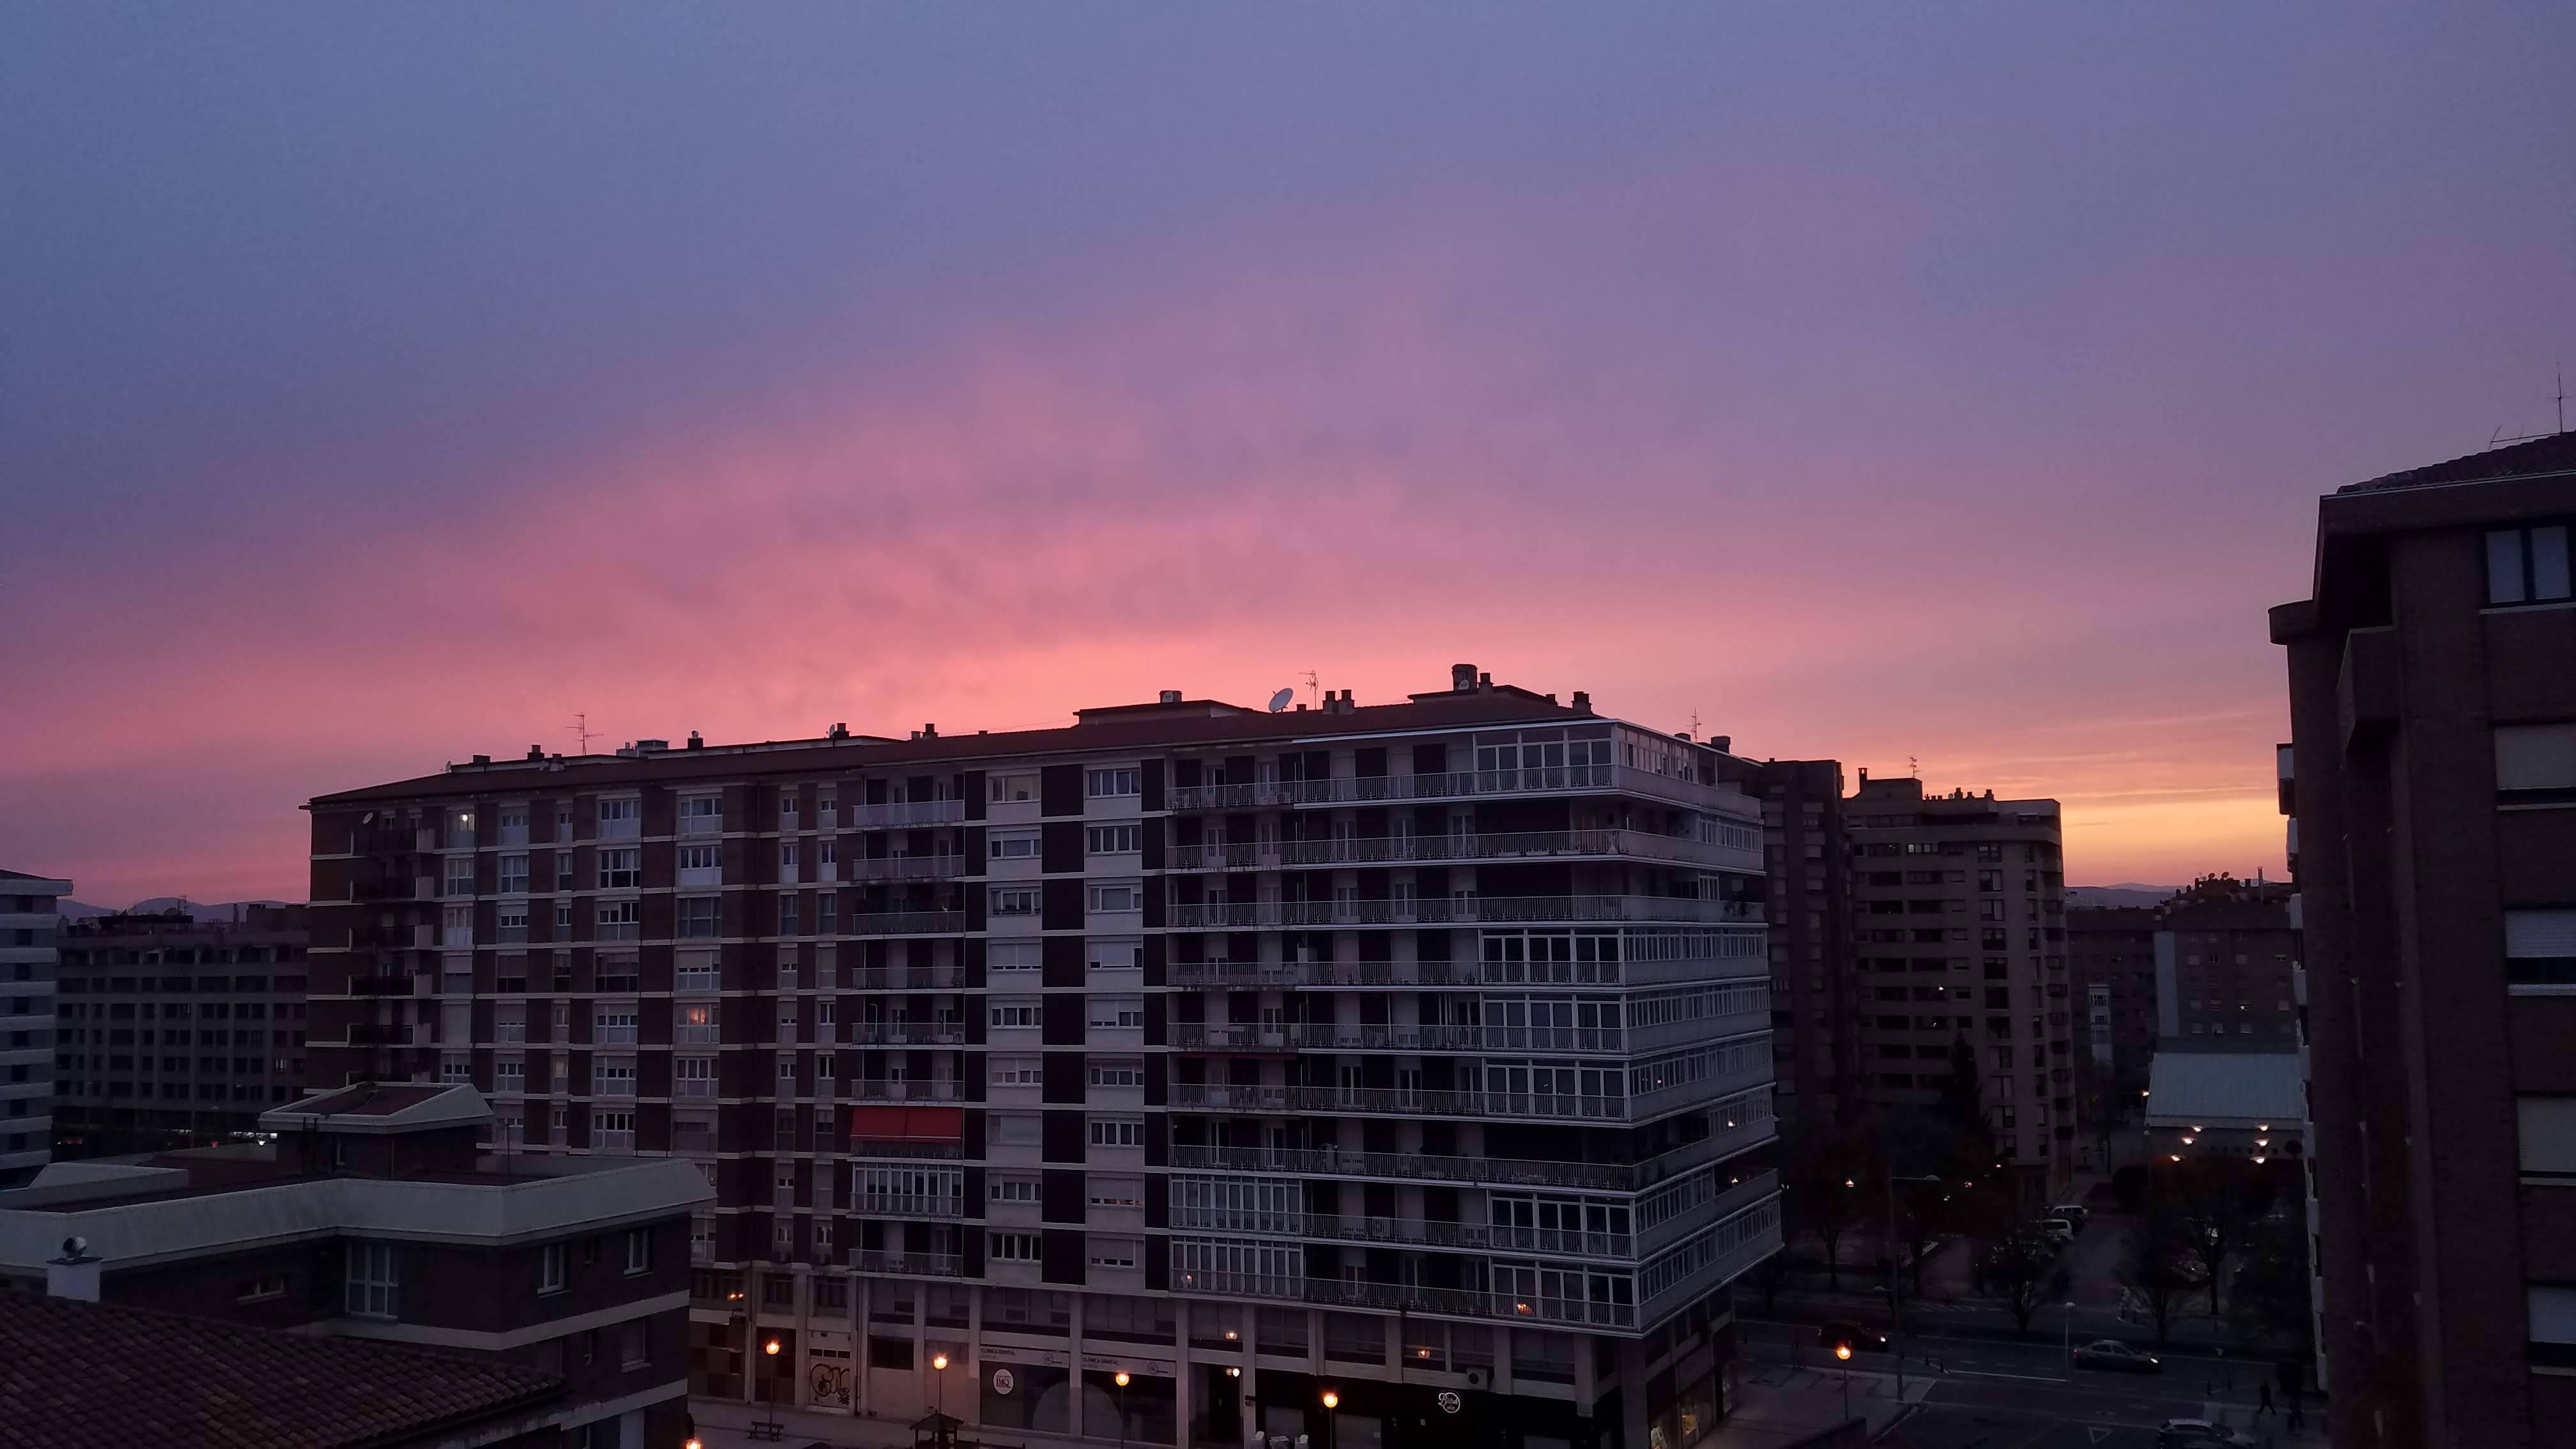 sunset